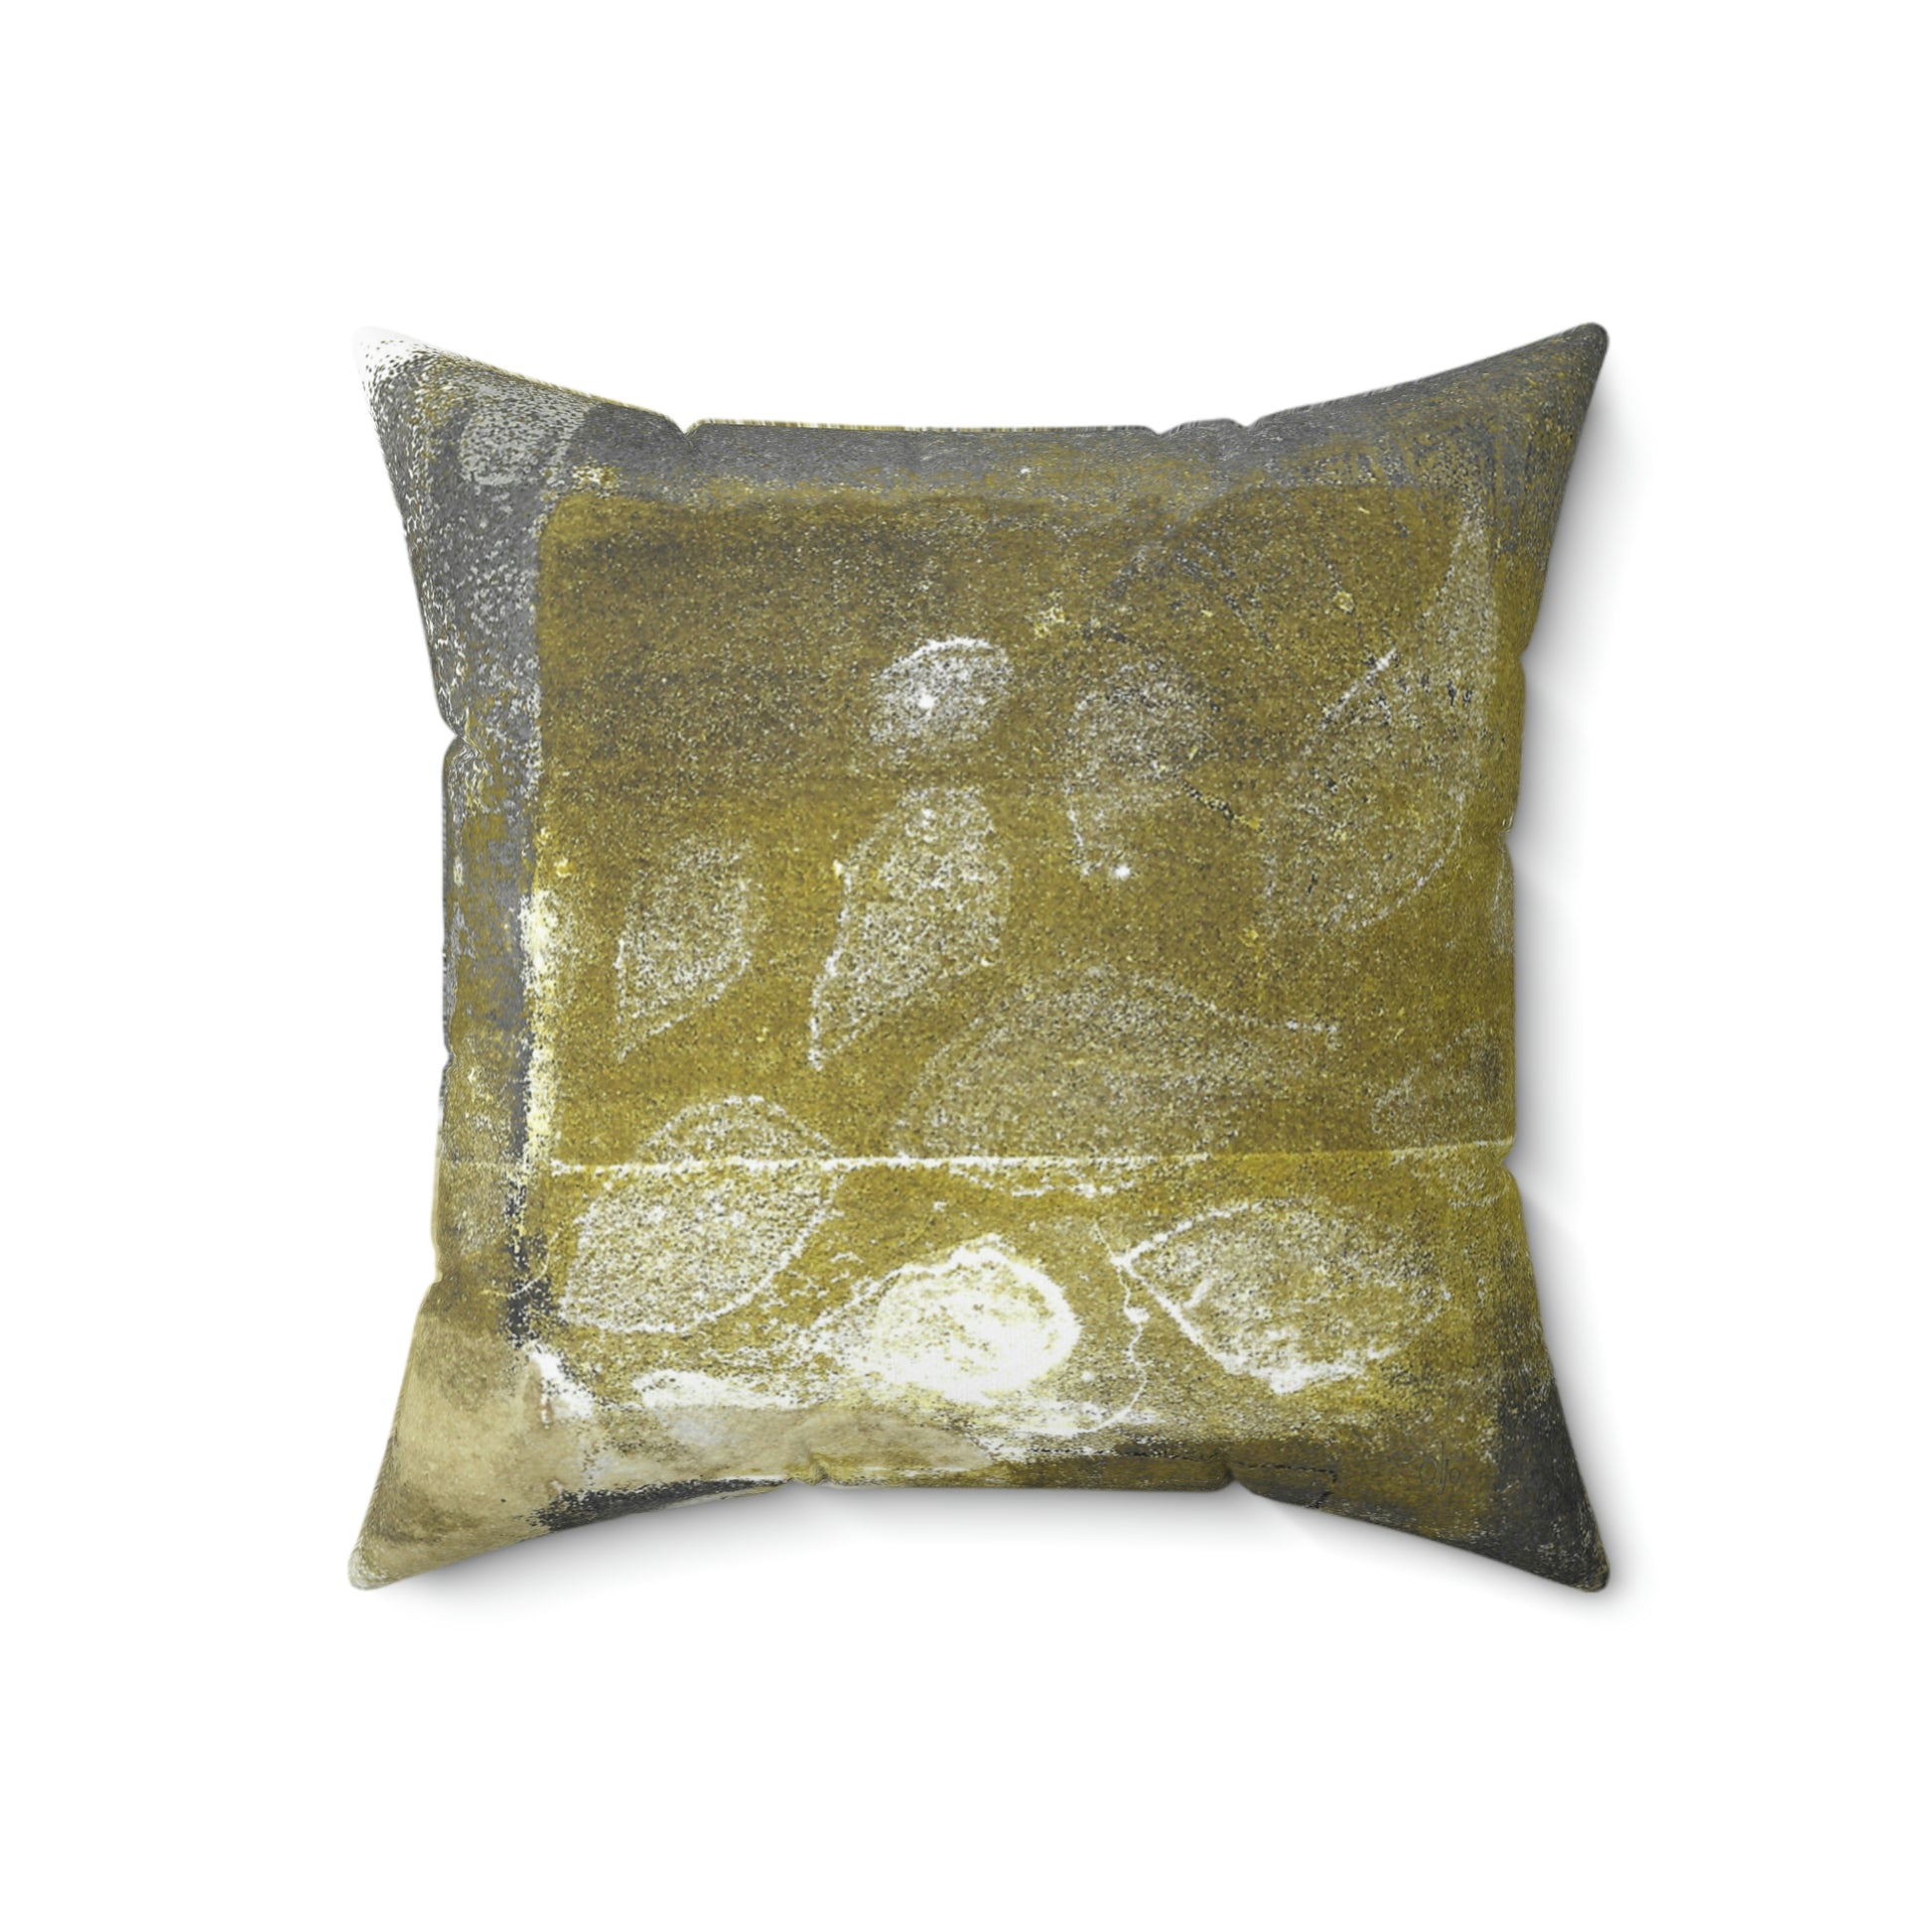 Light Fossils Square Pillow - Alja Design